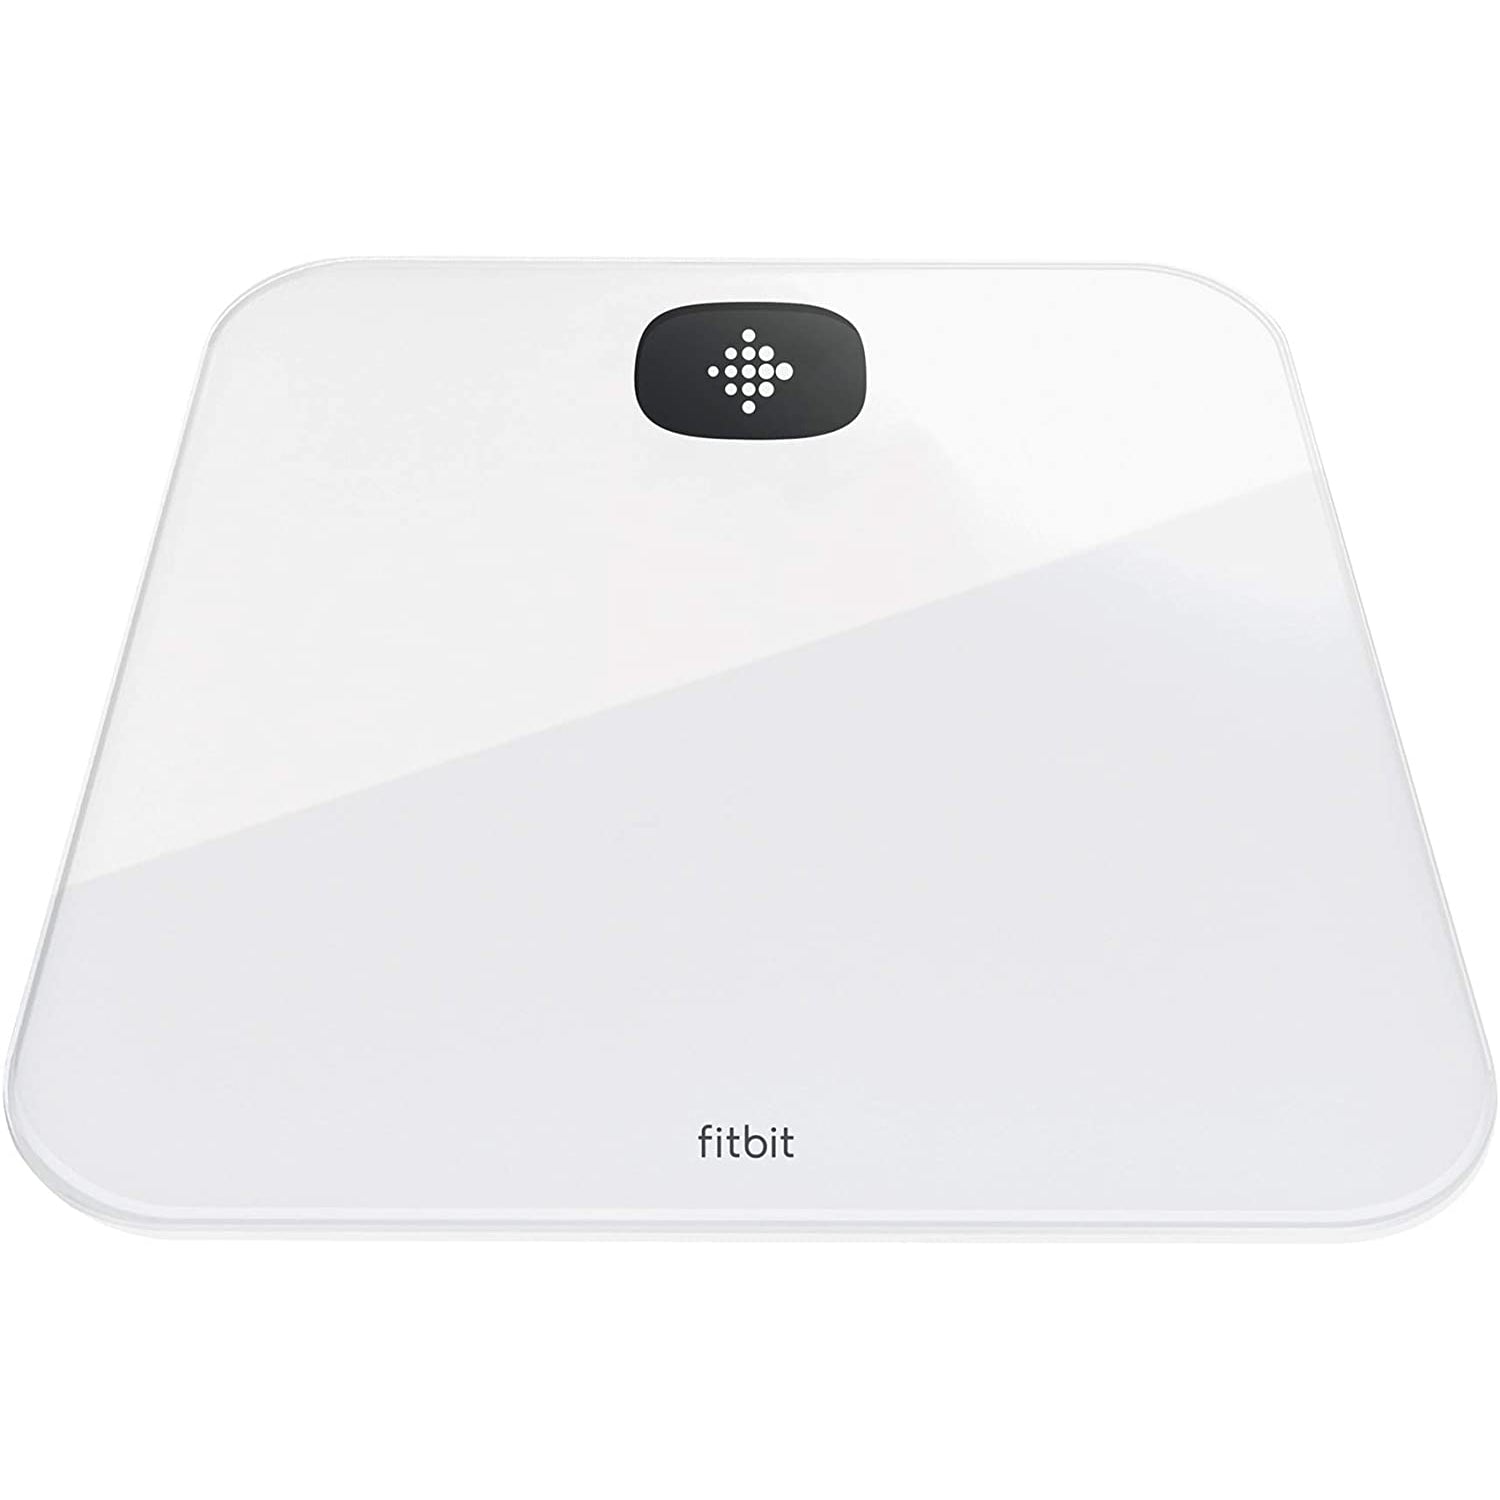 Fitbit Aria Air Smart Scale - White / Black